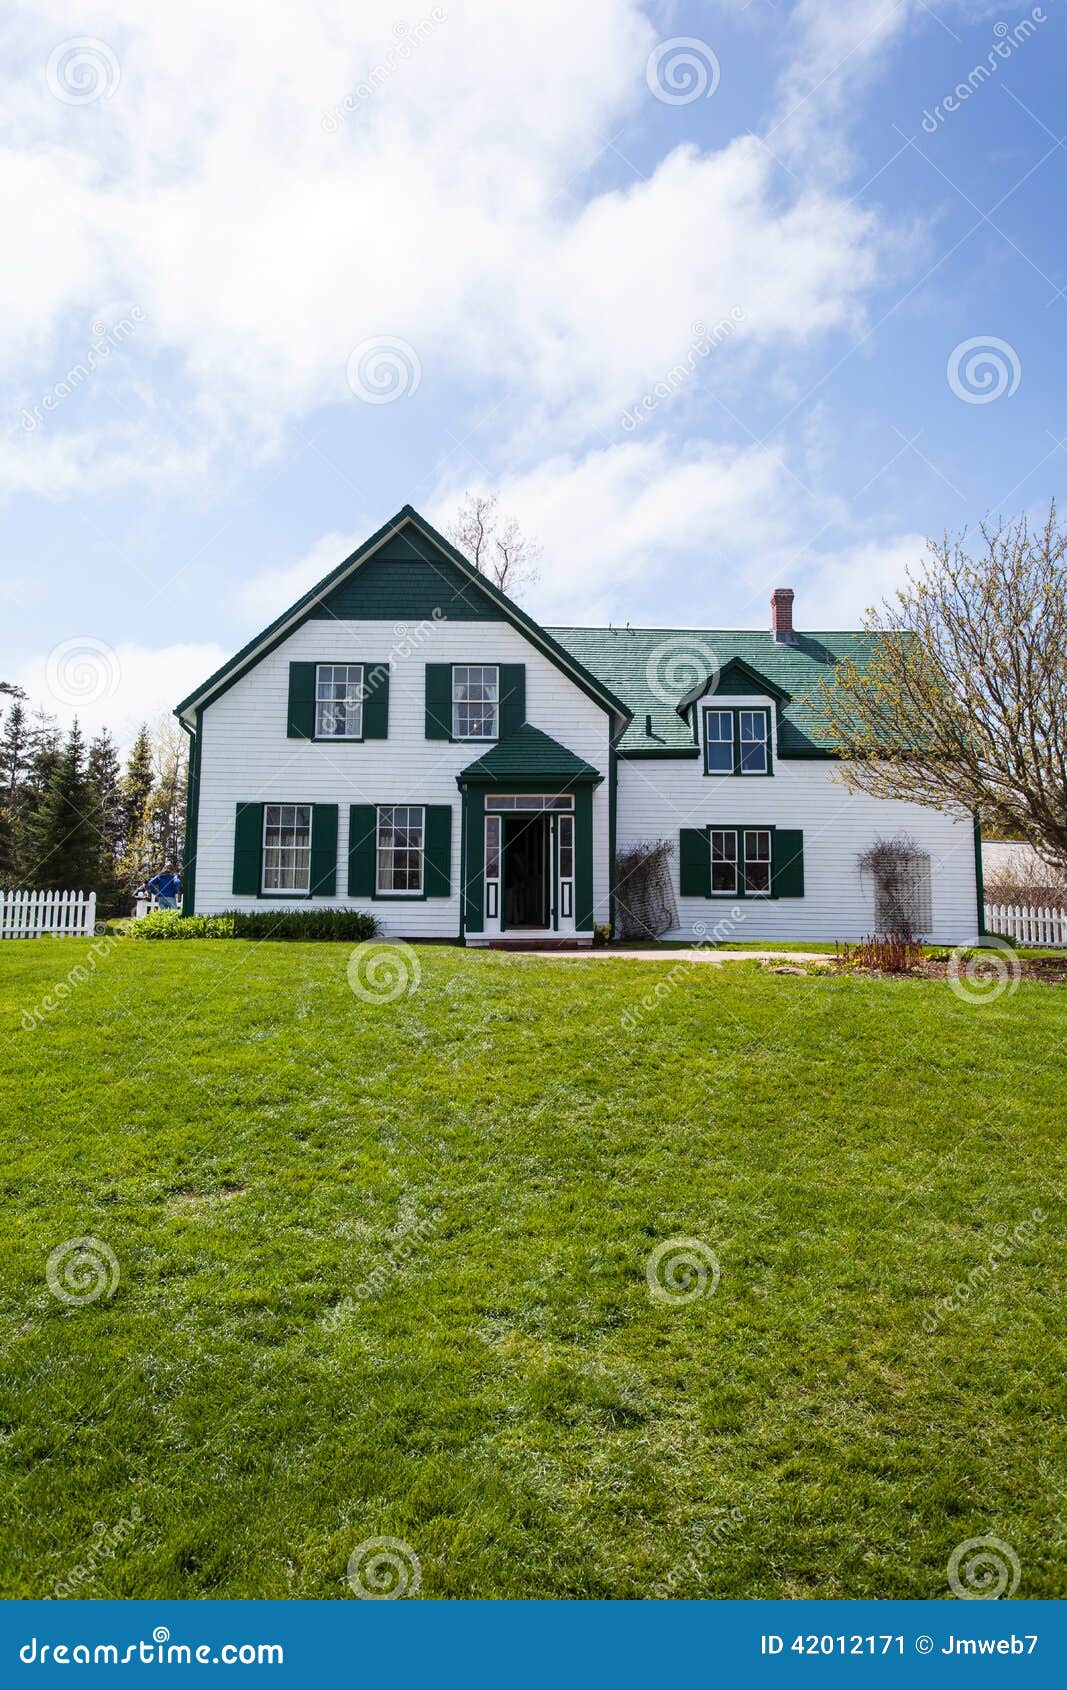 green gables house